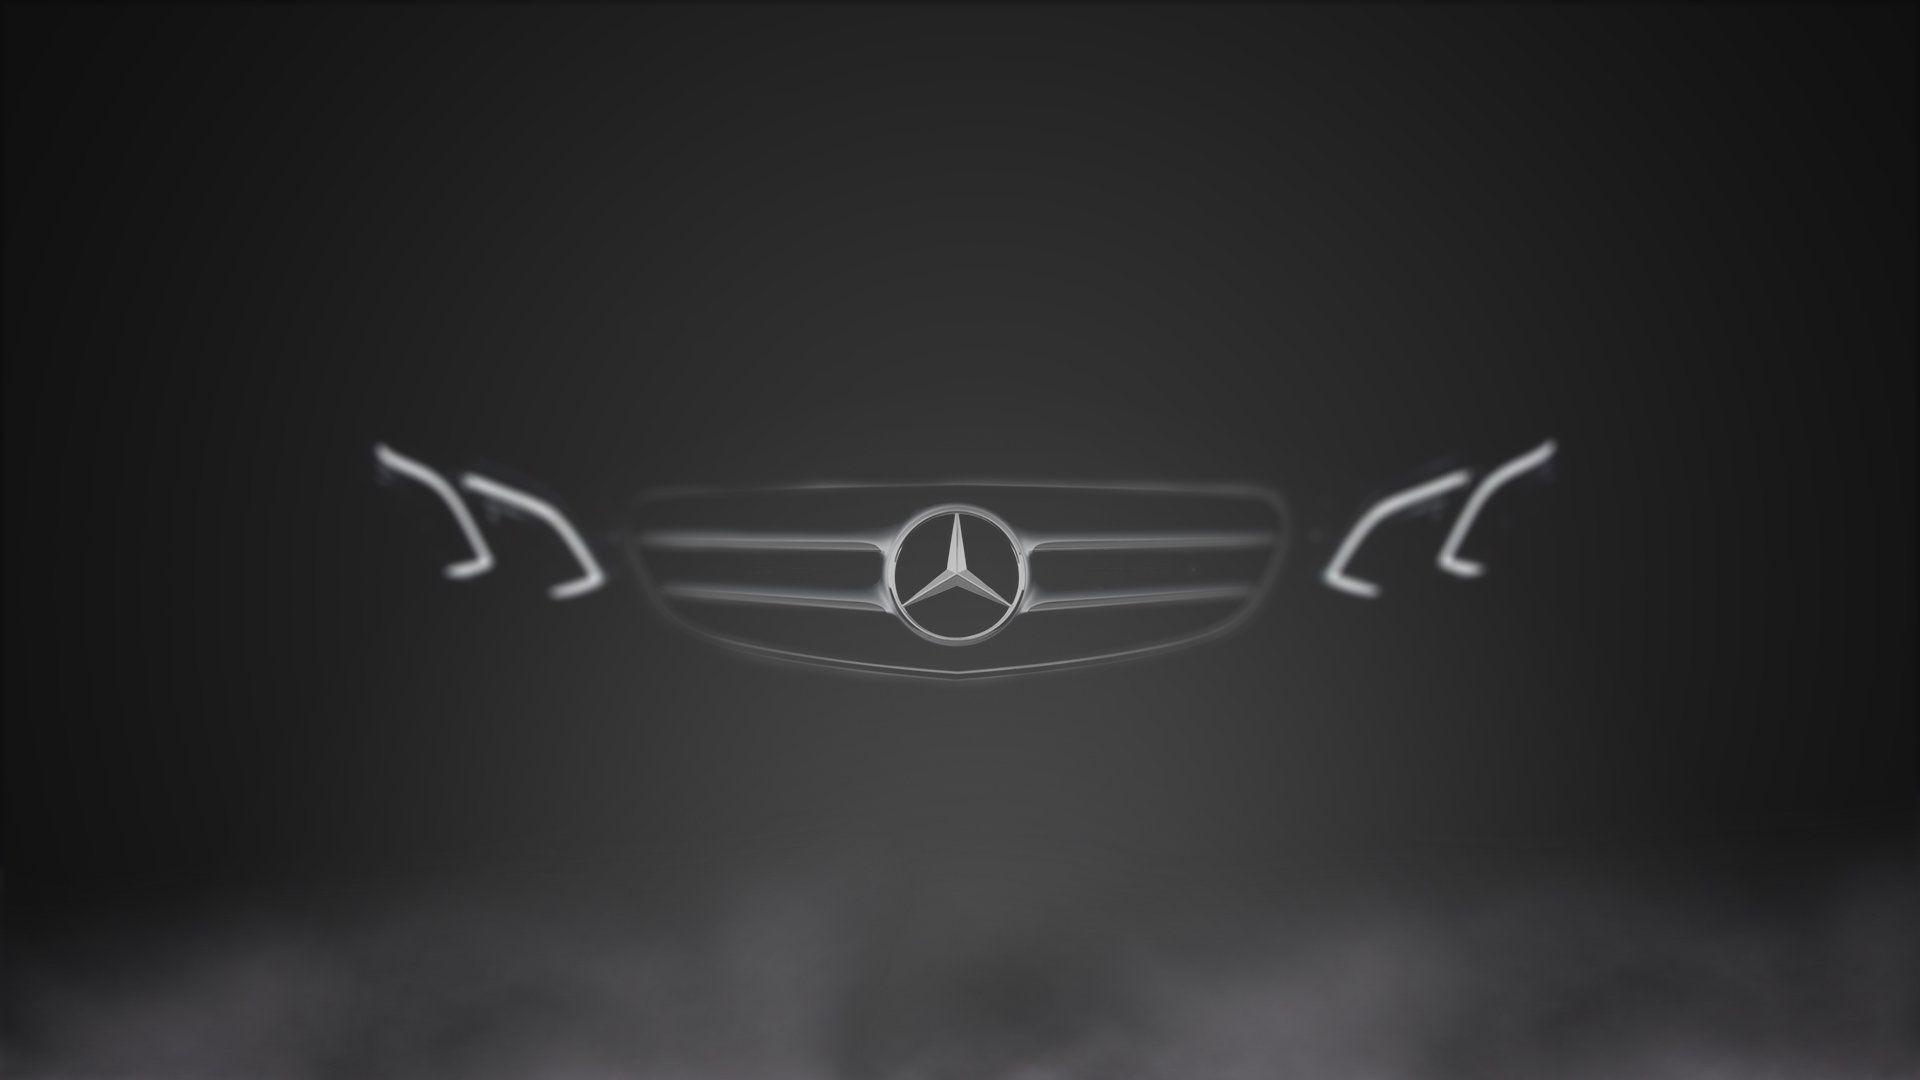 Mercedes Benz Logo Wallpapers Top Free Mercedes Benz Logo Backgrounds Wallpaperaccess